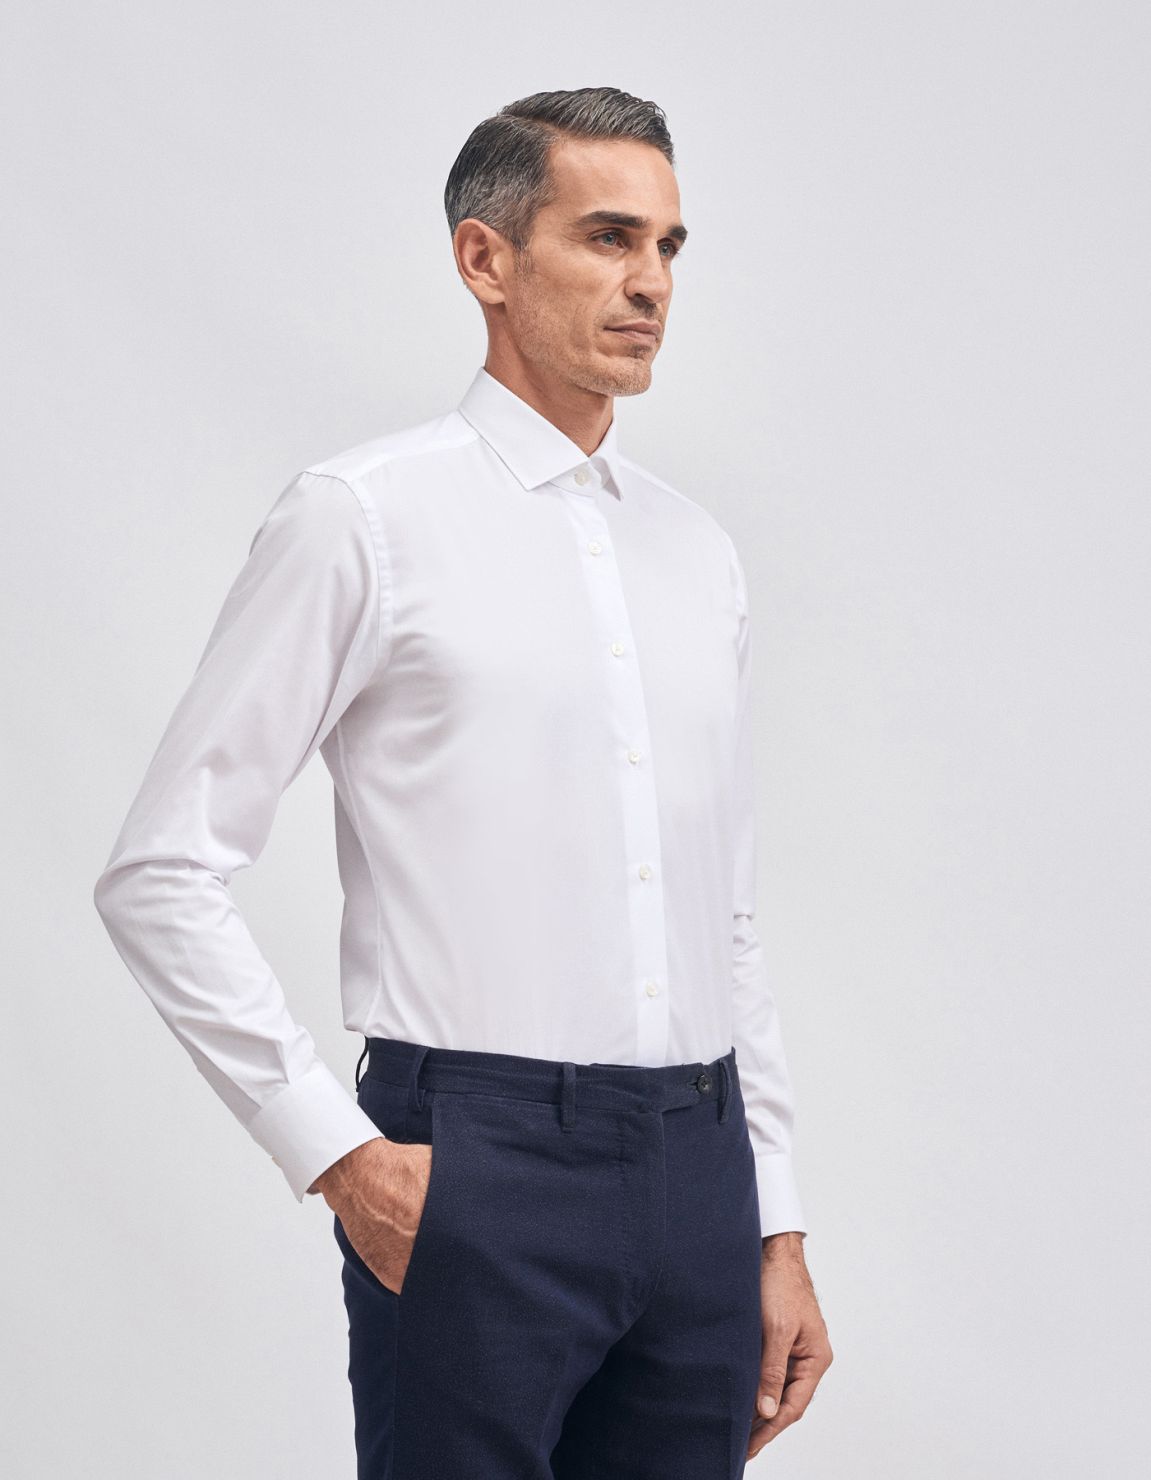 Shirt Collar small cutaway White Twill Slim Fit 1